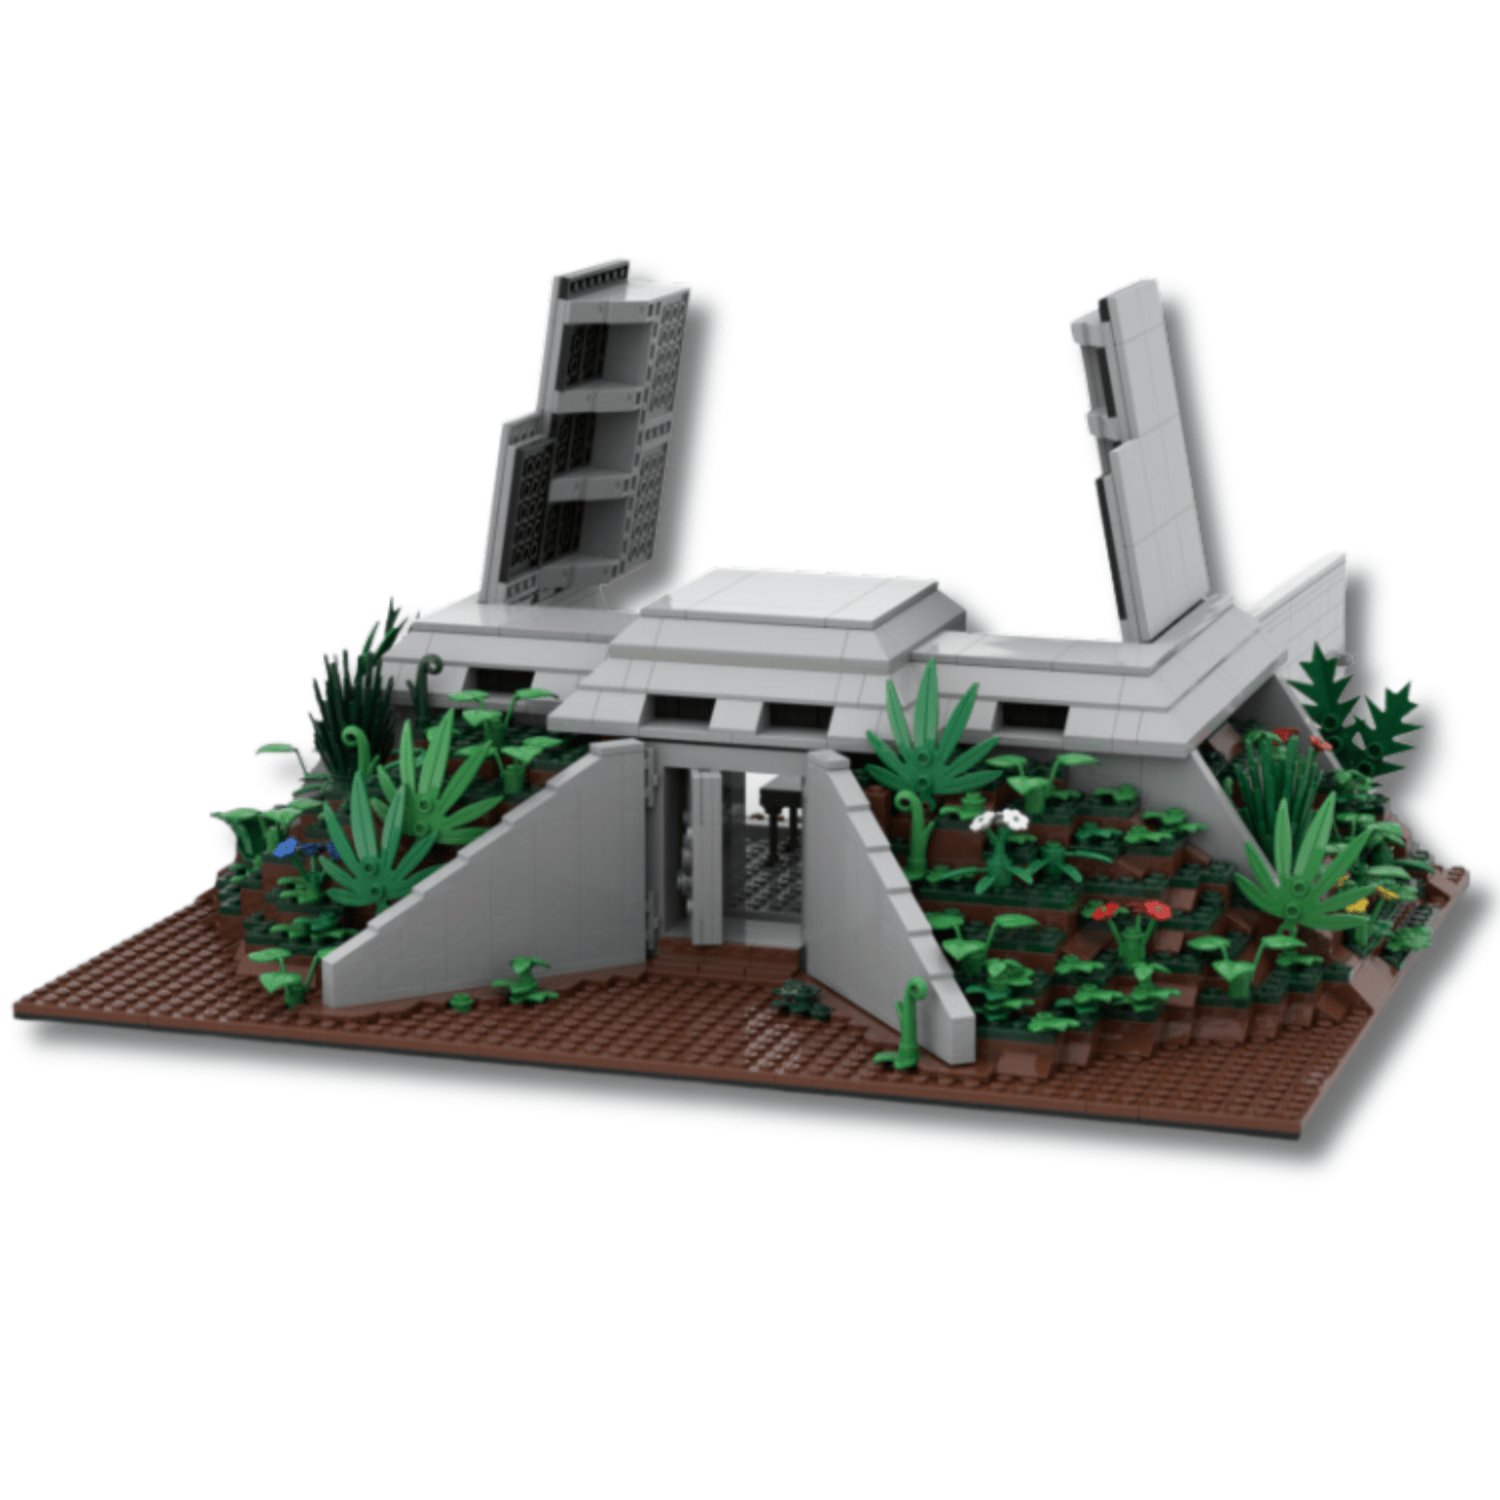 LEGO Jurassic Park Diorama Bunker